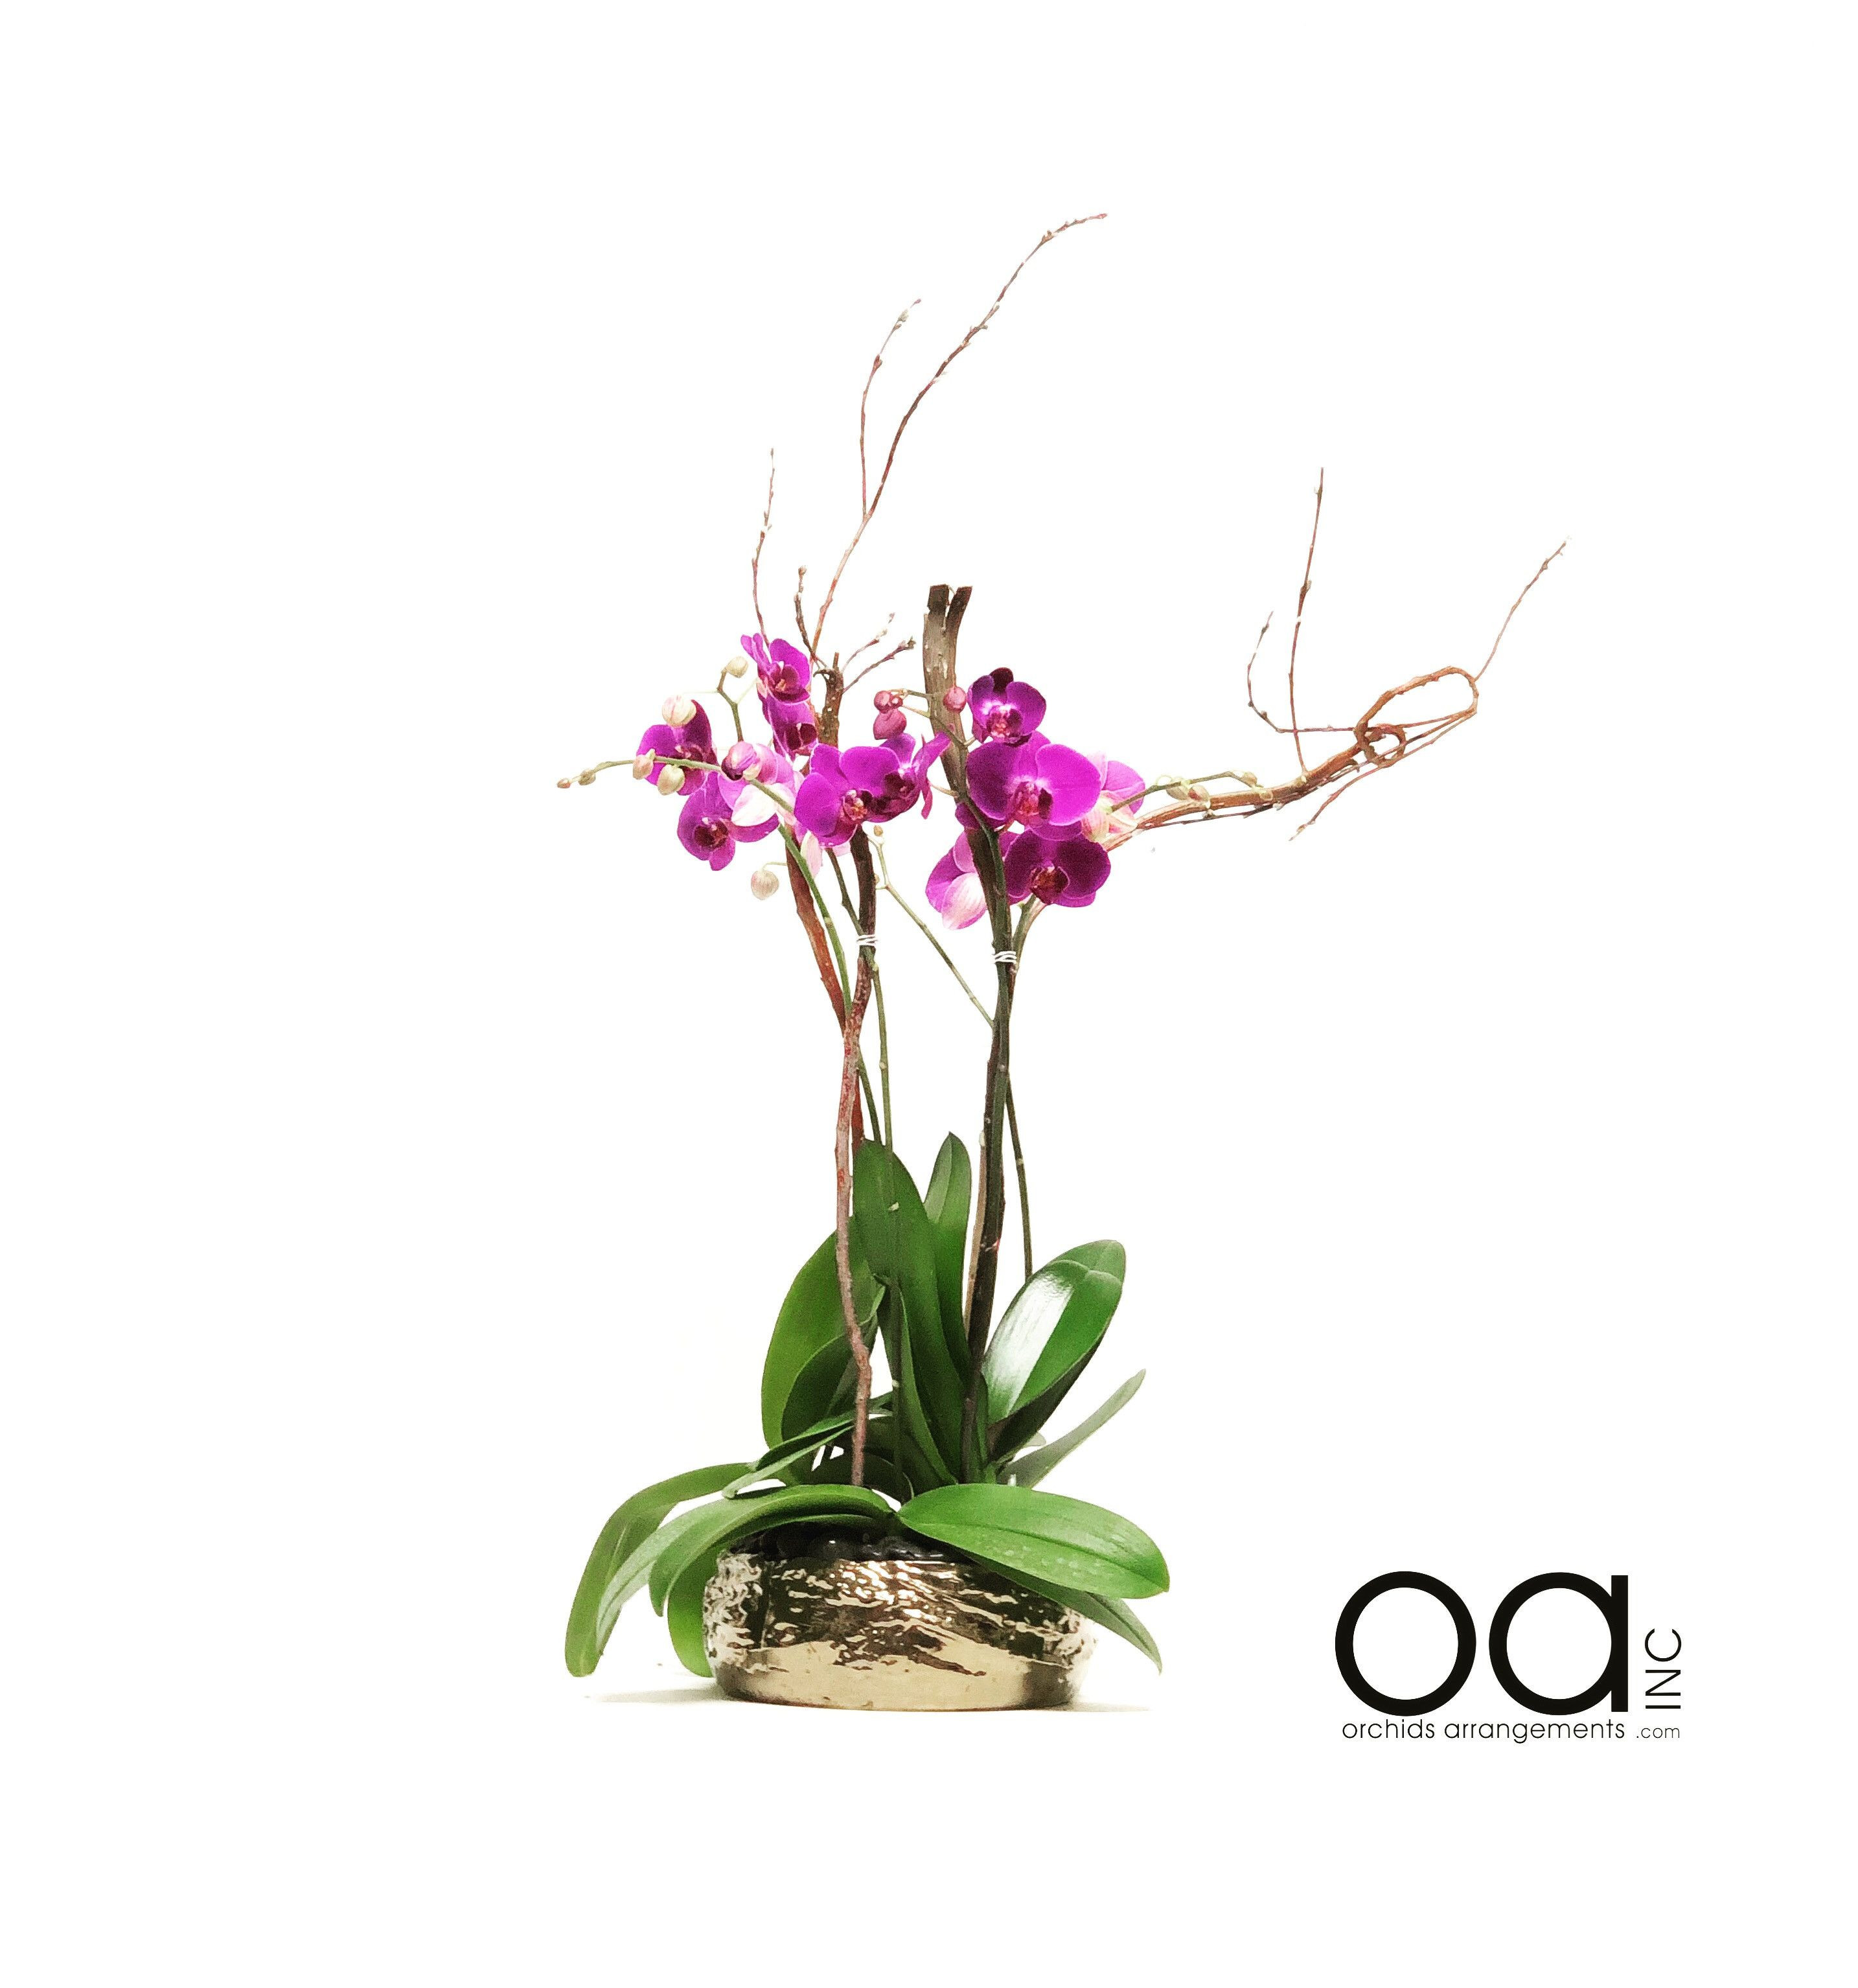 16 Elegant Purple Glass Pebbles for Vases 2022 free download purple glass pebbles for vases of orchid in glass vase awesome send 4 orchids arrangement hollywood pertaining to orchid in glass vase awesome send 4 orchids arrangement hollywood bowl colle